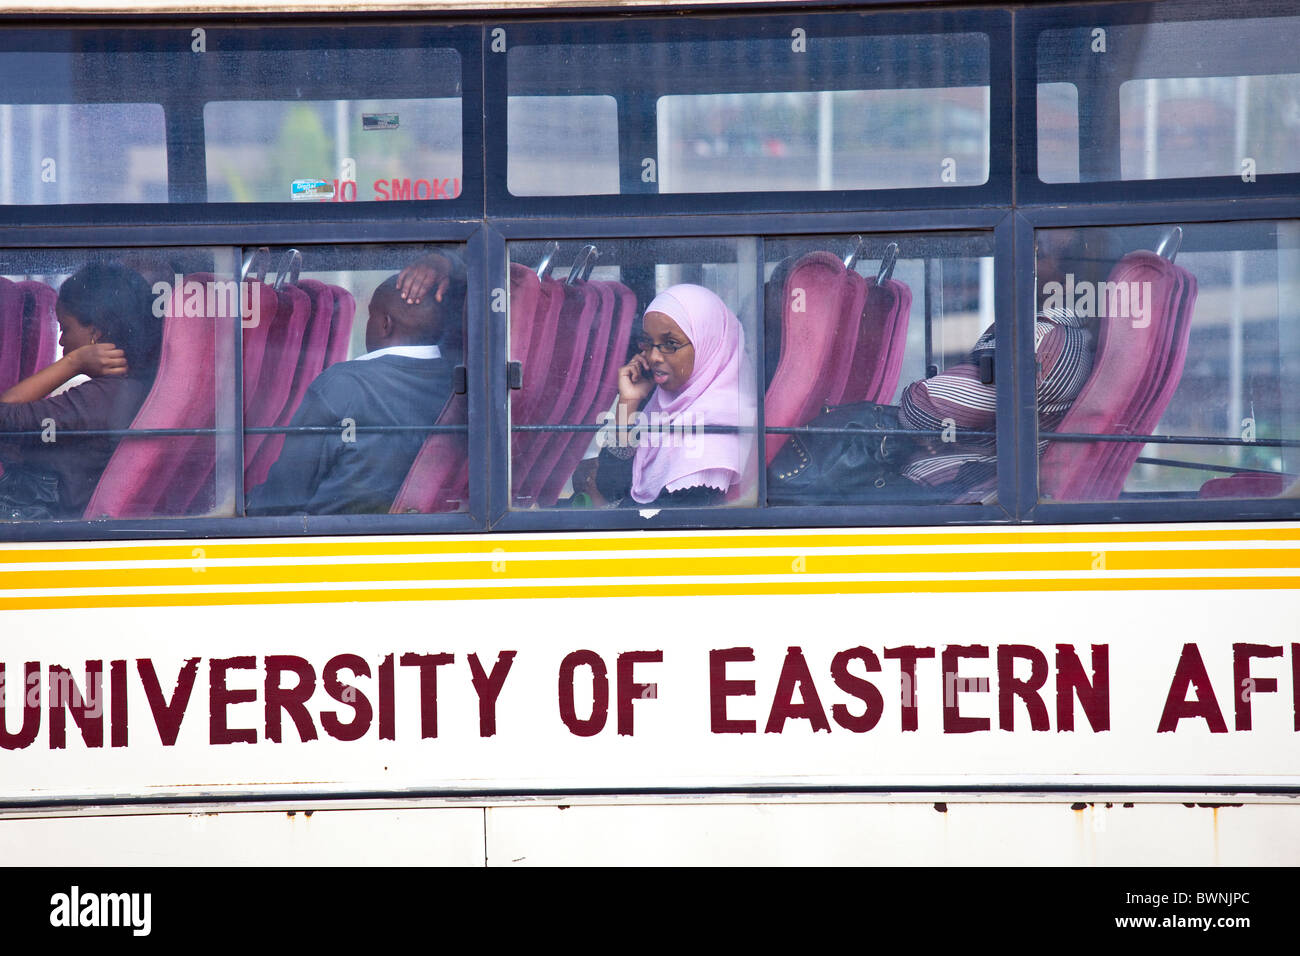 Muslim girl on a Catholic University of Eastern Africa bus, Nairobi, Kenya Stock Photo